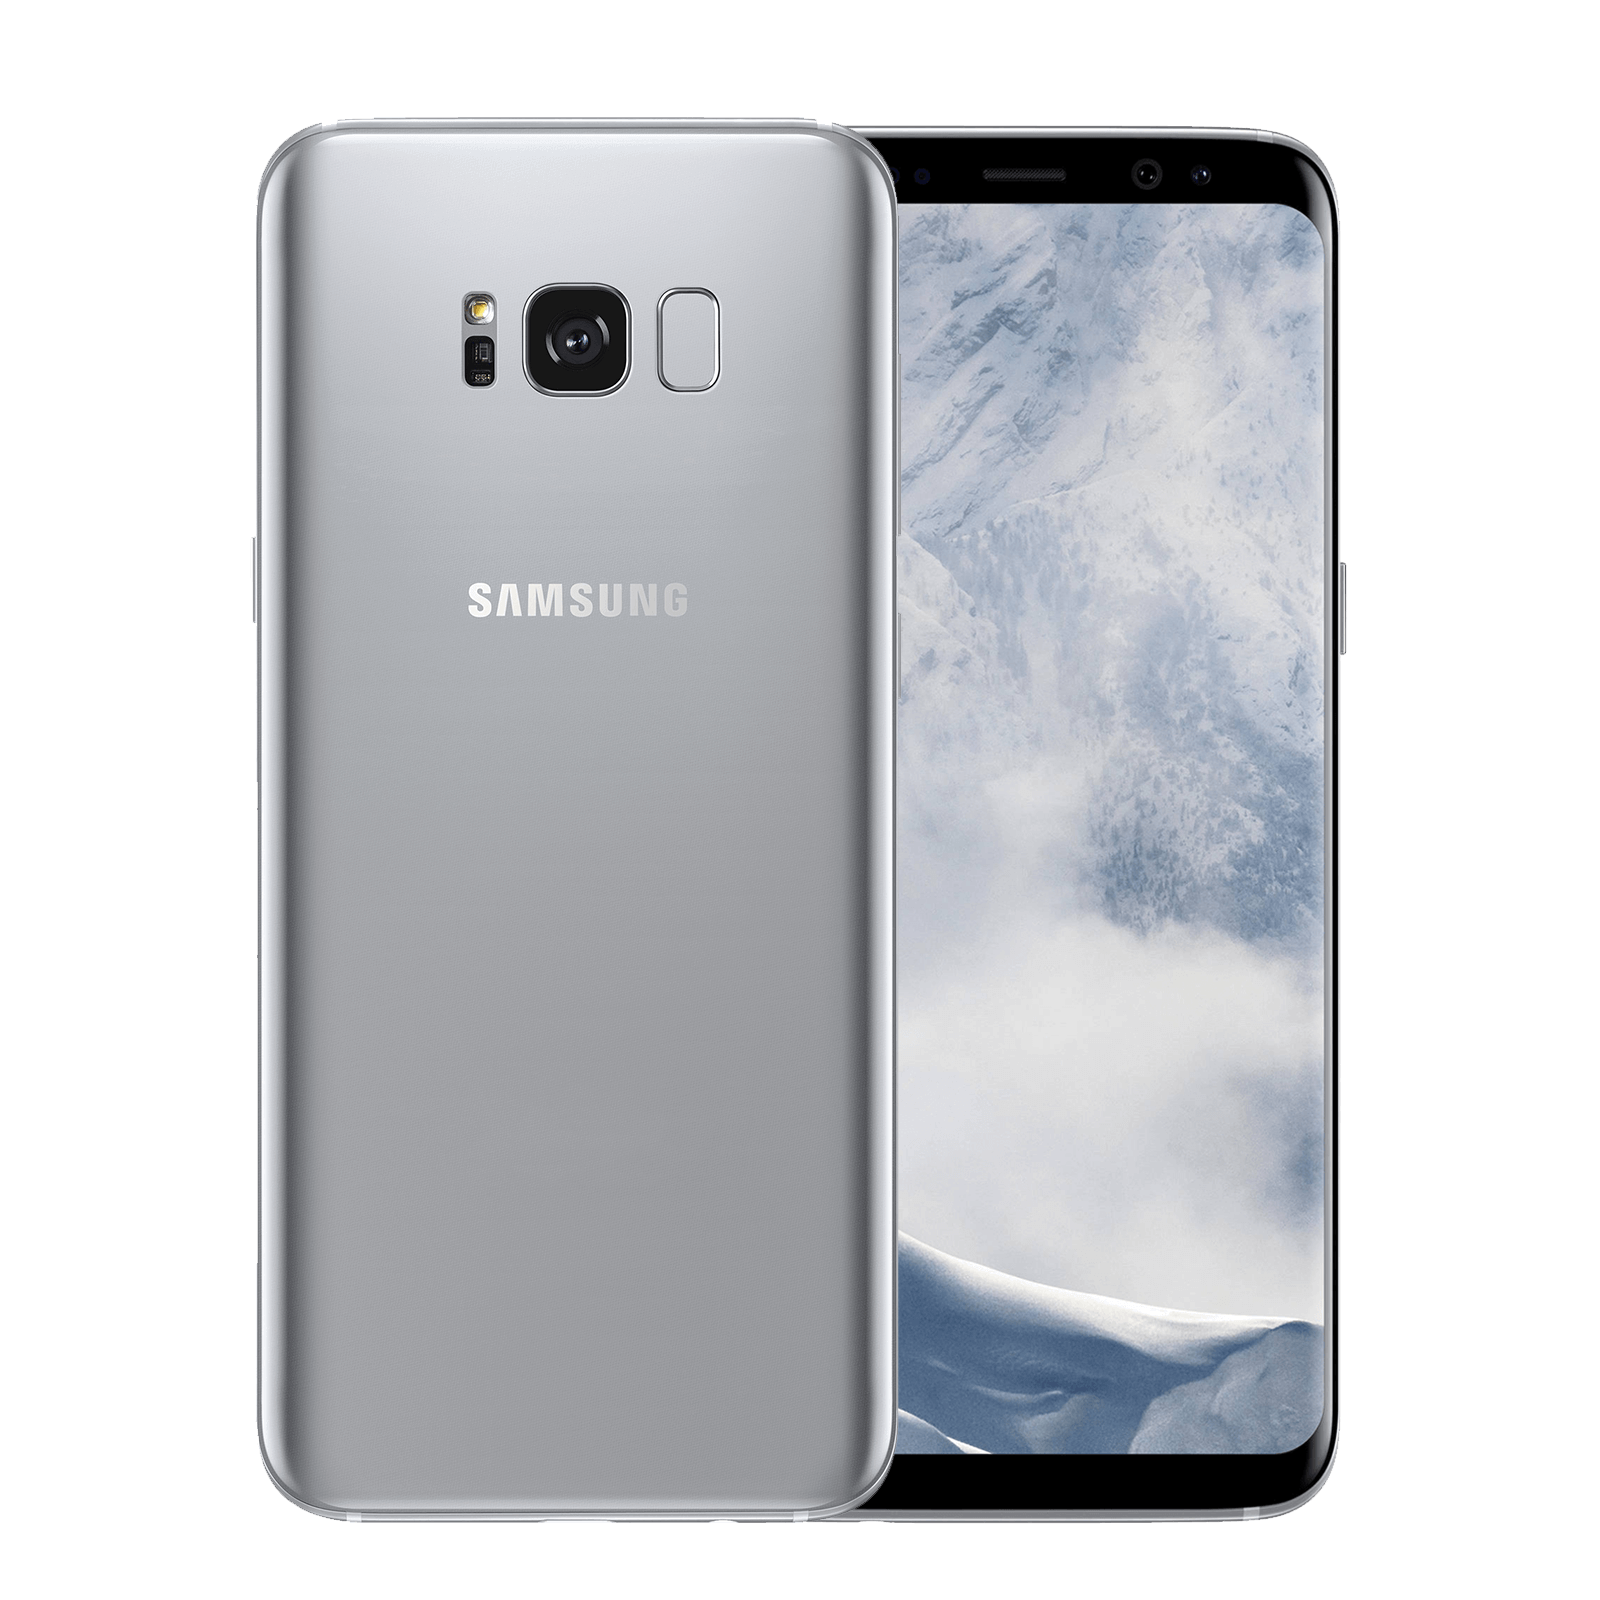 Samsung Galaxy S8 64GB Silver G950F Very Good - Unlocked 64GB Silver Very Good